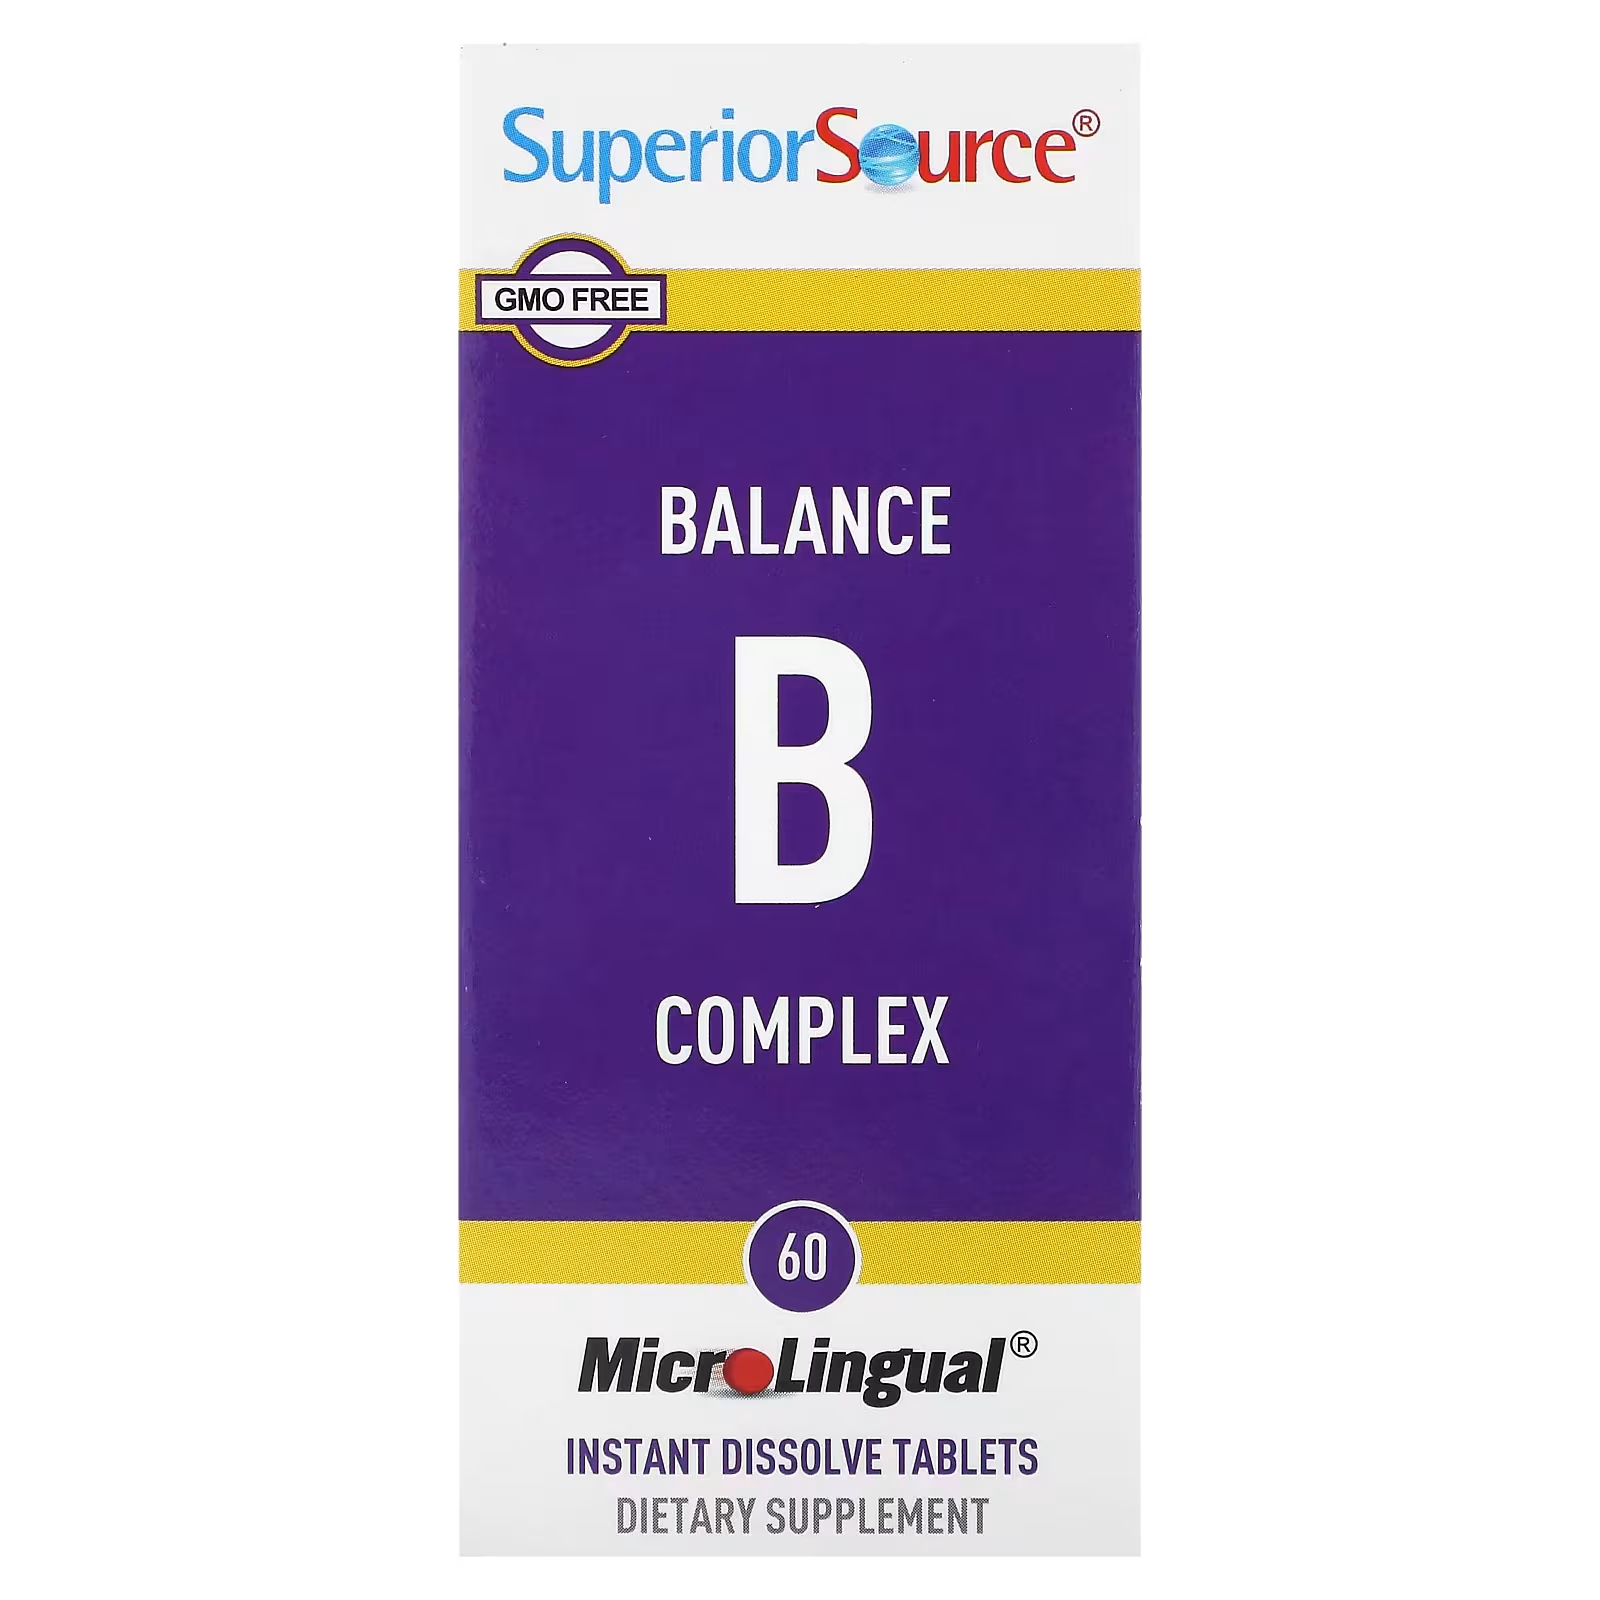 Комплекс MicroLingual Superior Source Balance B, 60 растворяющихся таблеток